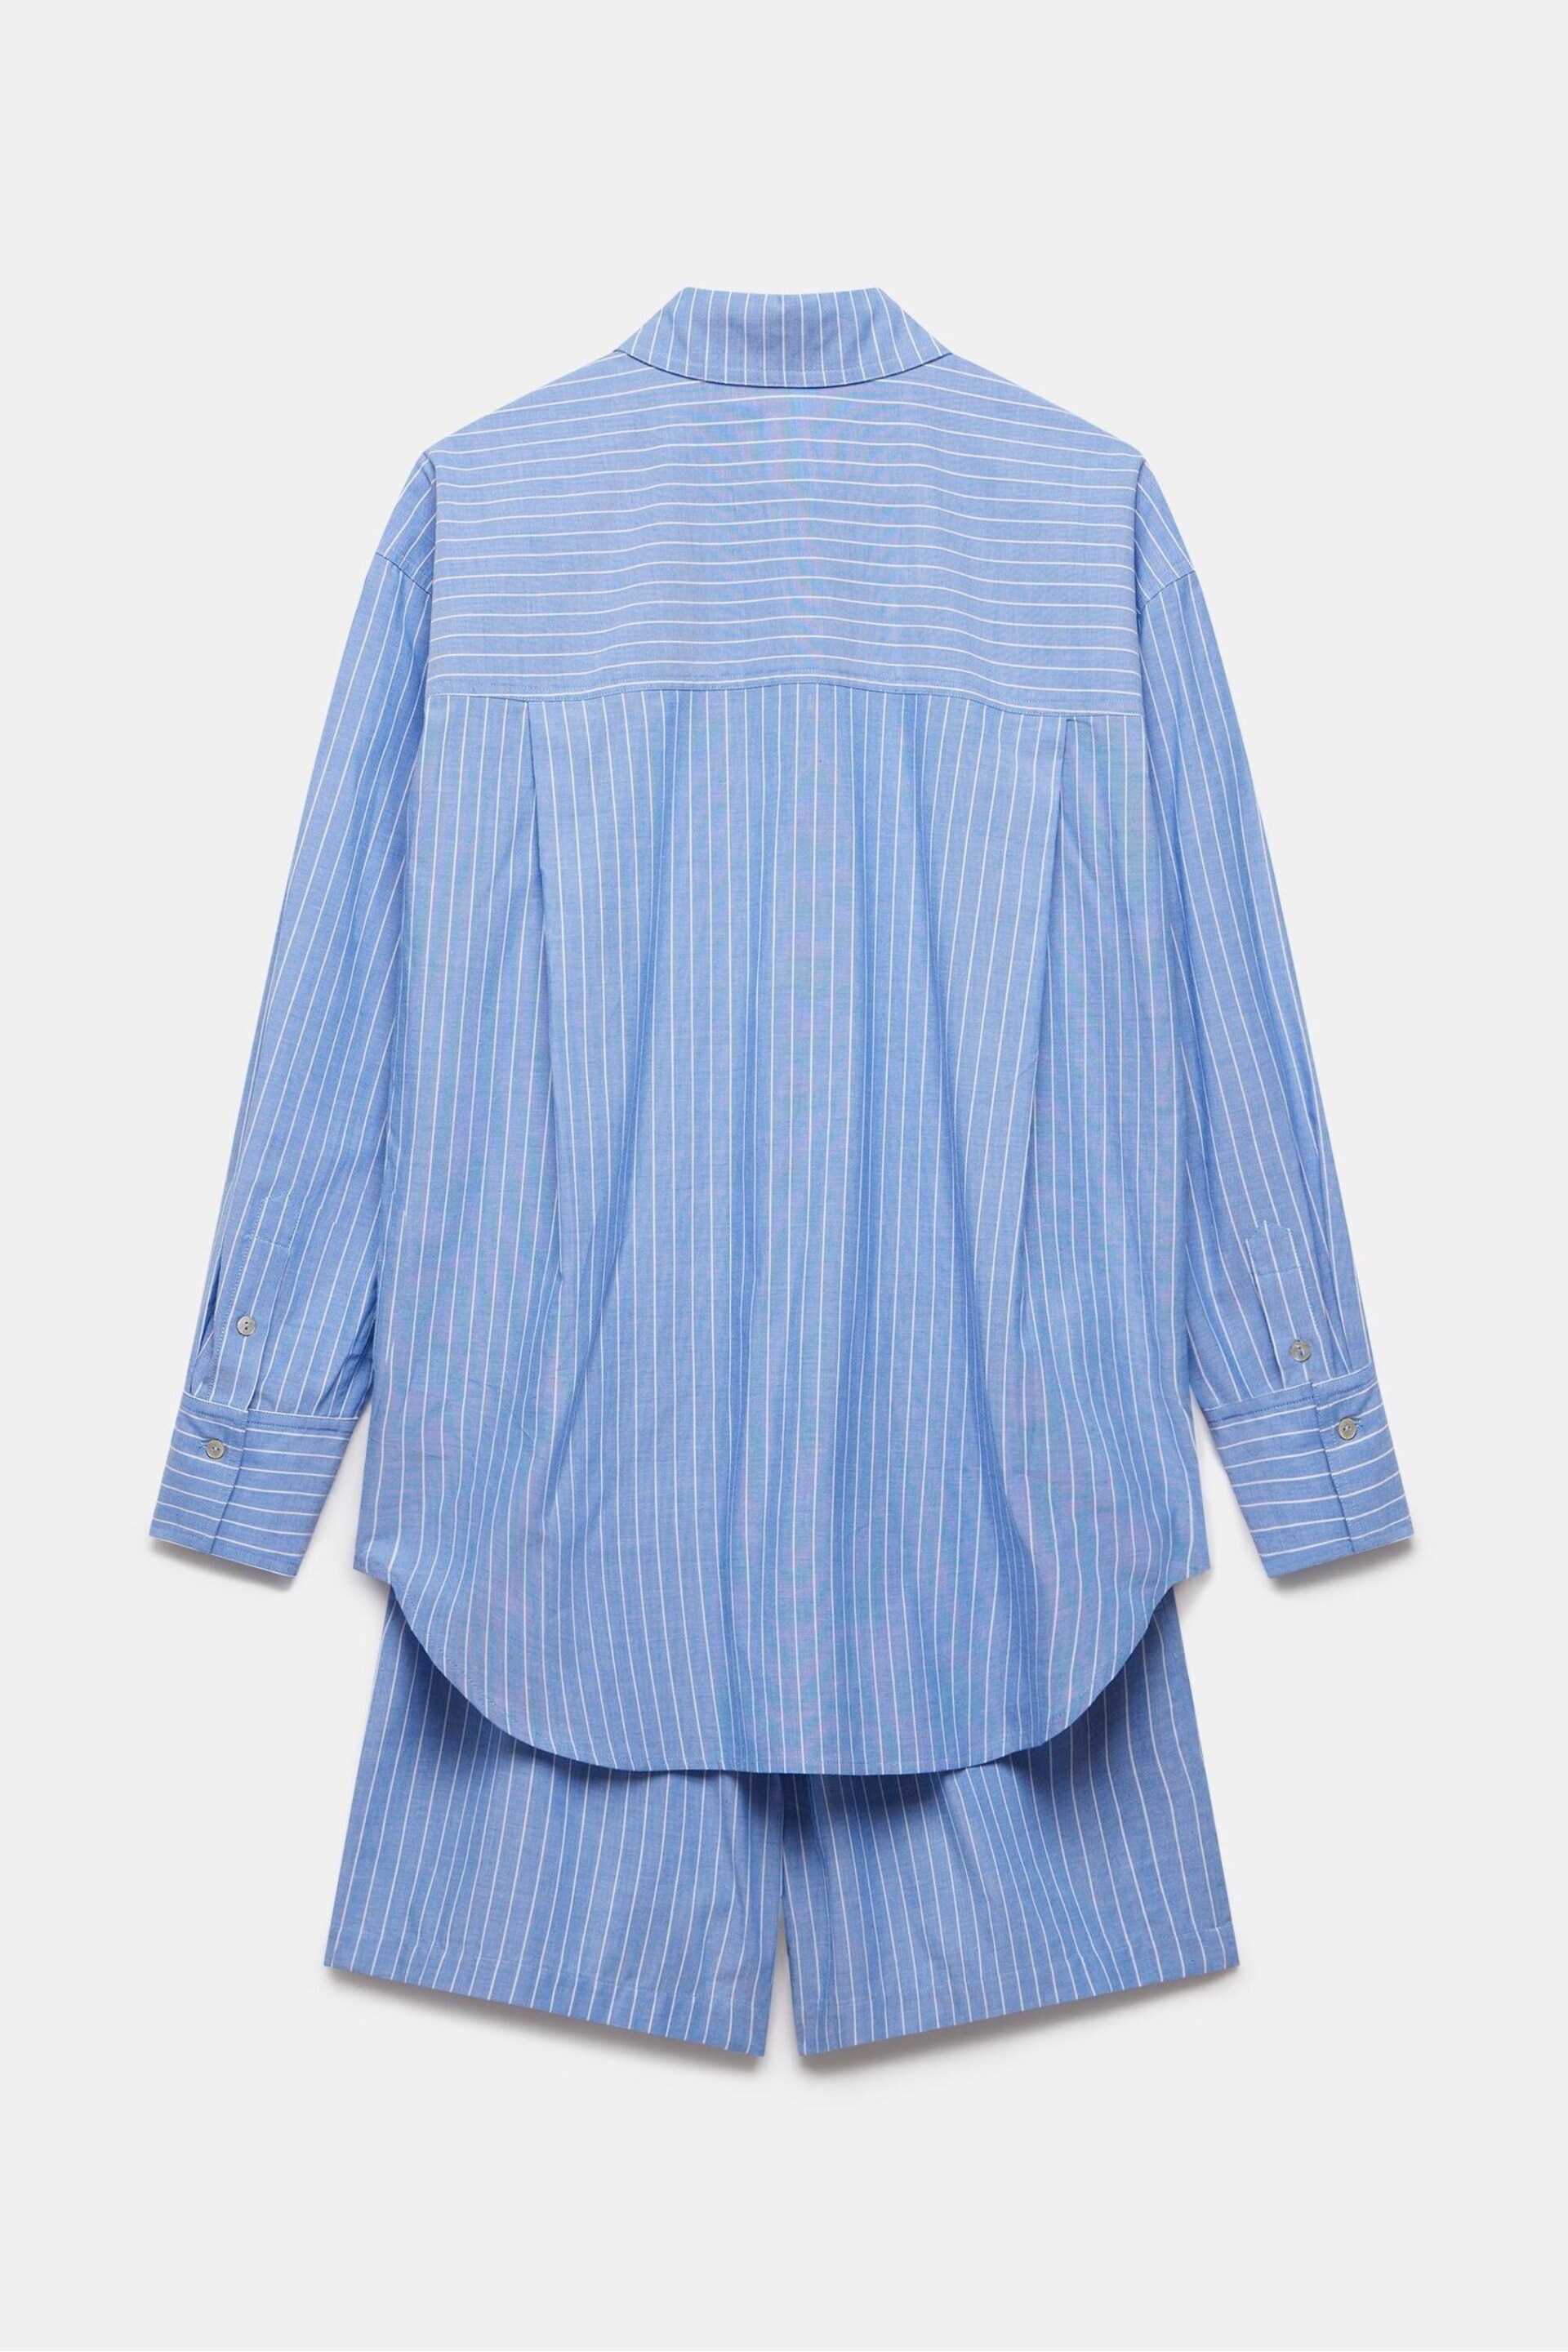 Mint Velvet Blue Cotton Shirt & Shorts Set - Image 4 of 4